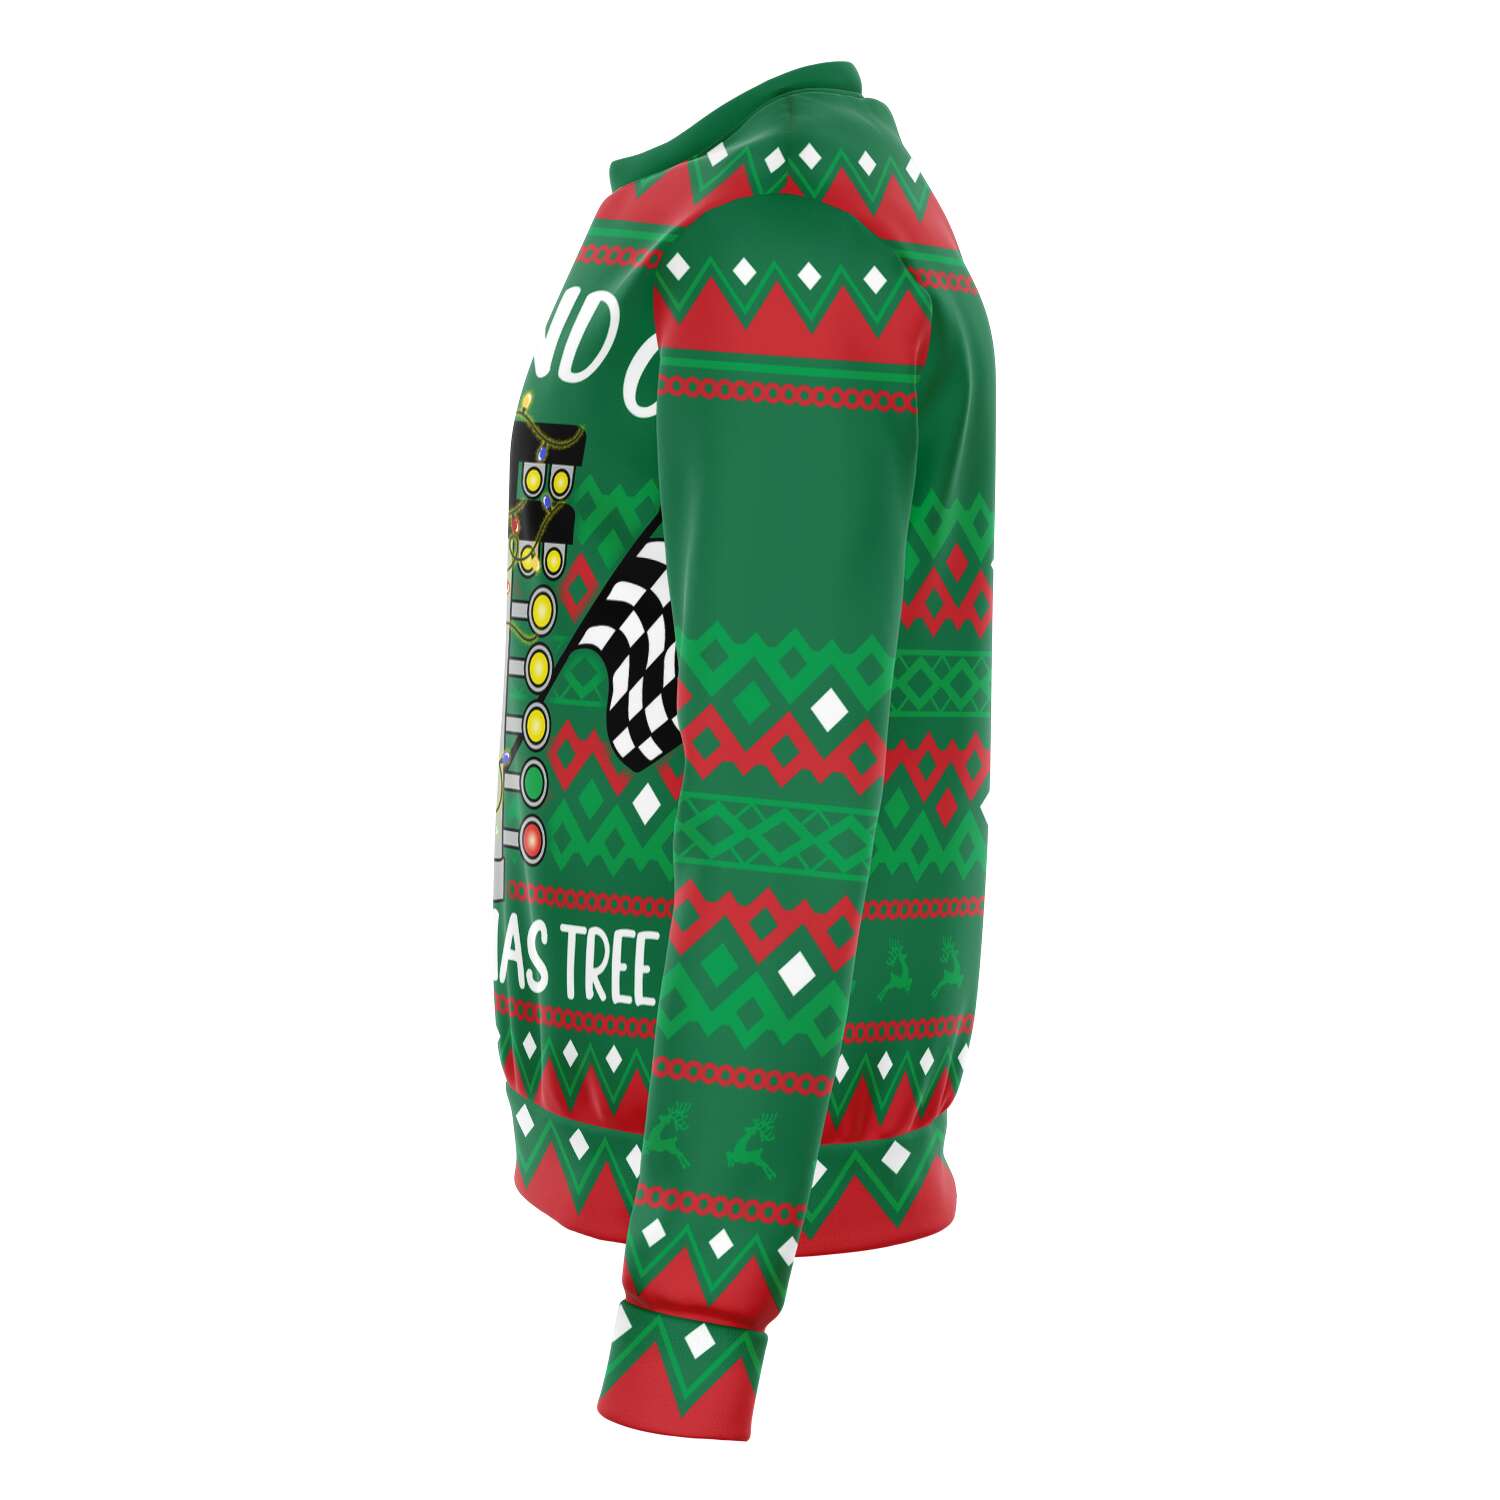 Drag Race Ugly Christmas Sweatshirt Fashion Sweatshirt - AOP Subliminator 